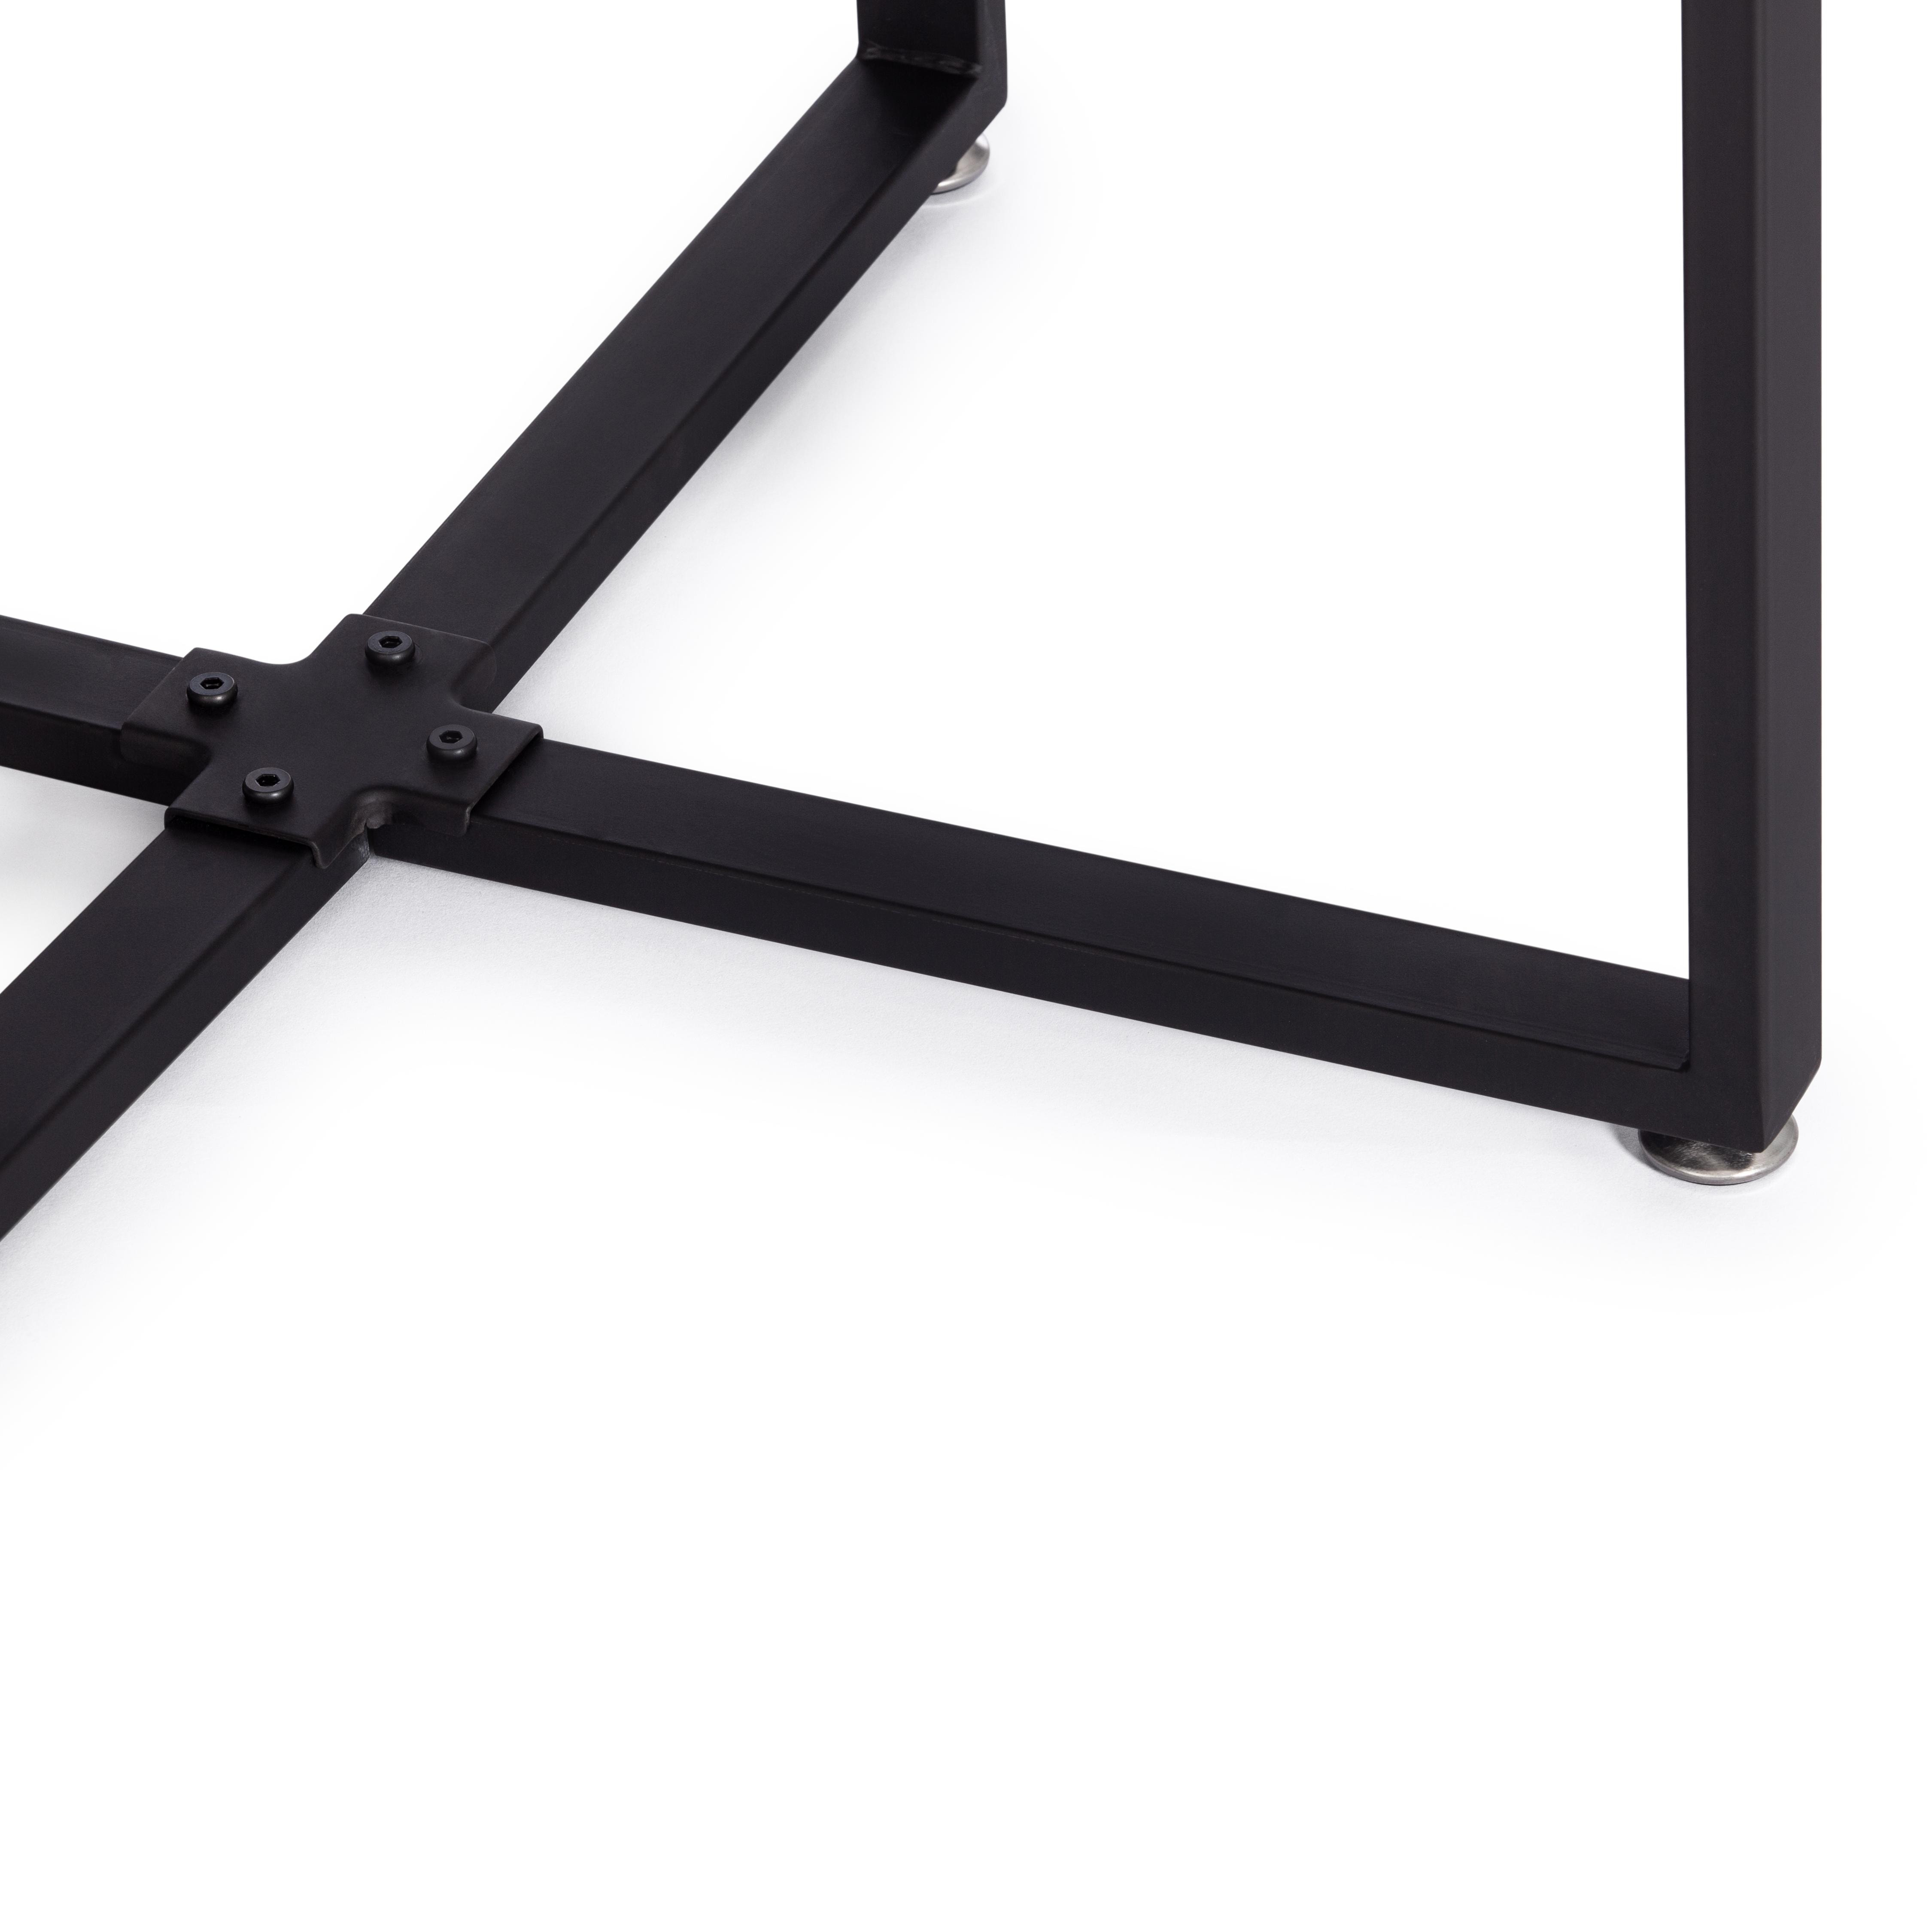 Комплект (стол, 4 стула) QUADRON (mod. PT14) Стол: МДФ/металл, стул: металл/вельвет, 100х100х73 см, 69х56х71 см, Black(Черный)/Light-grey(светло-